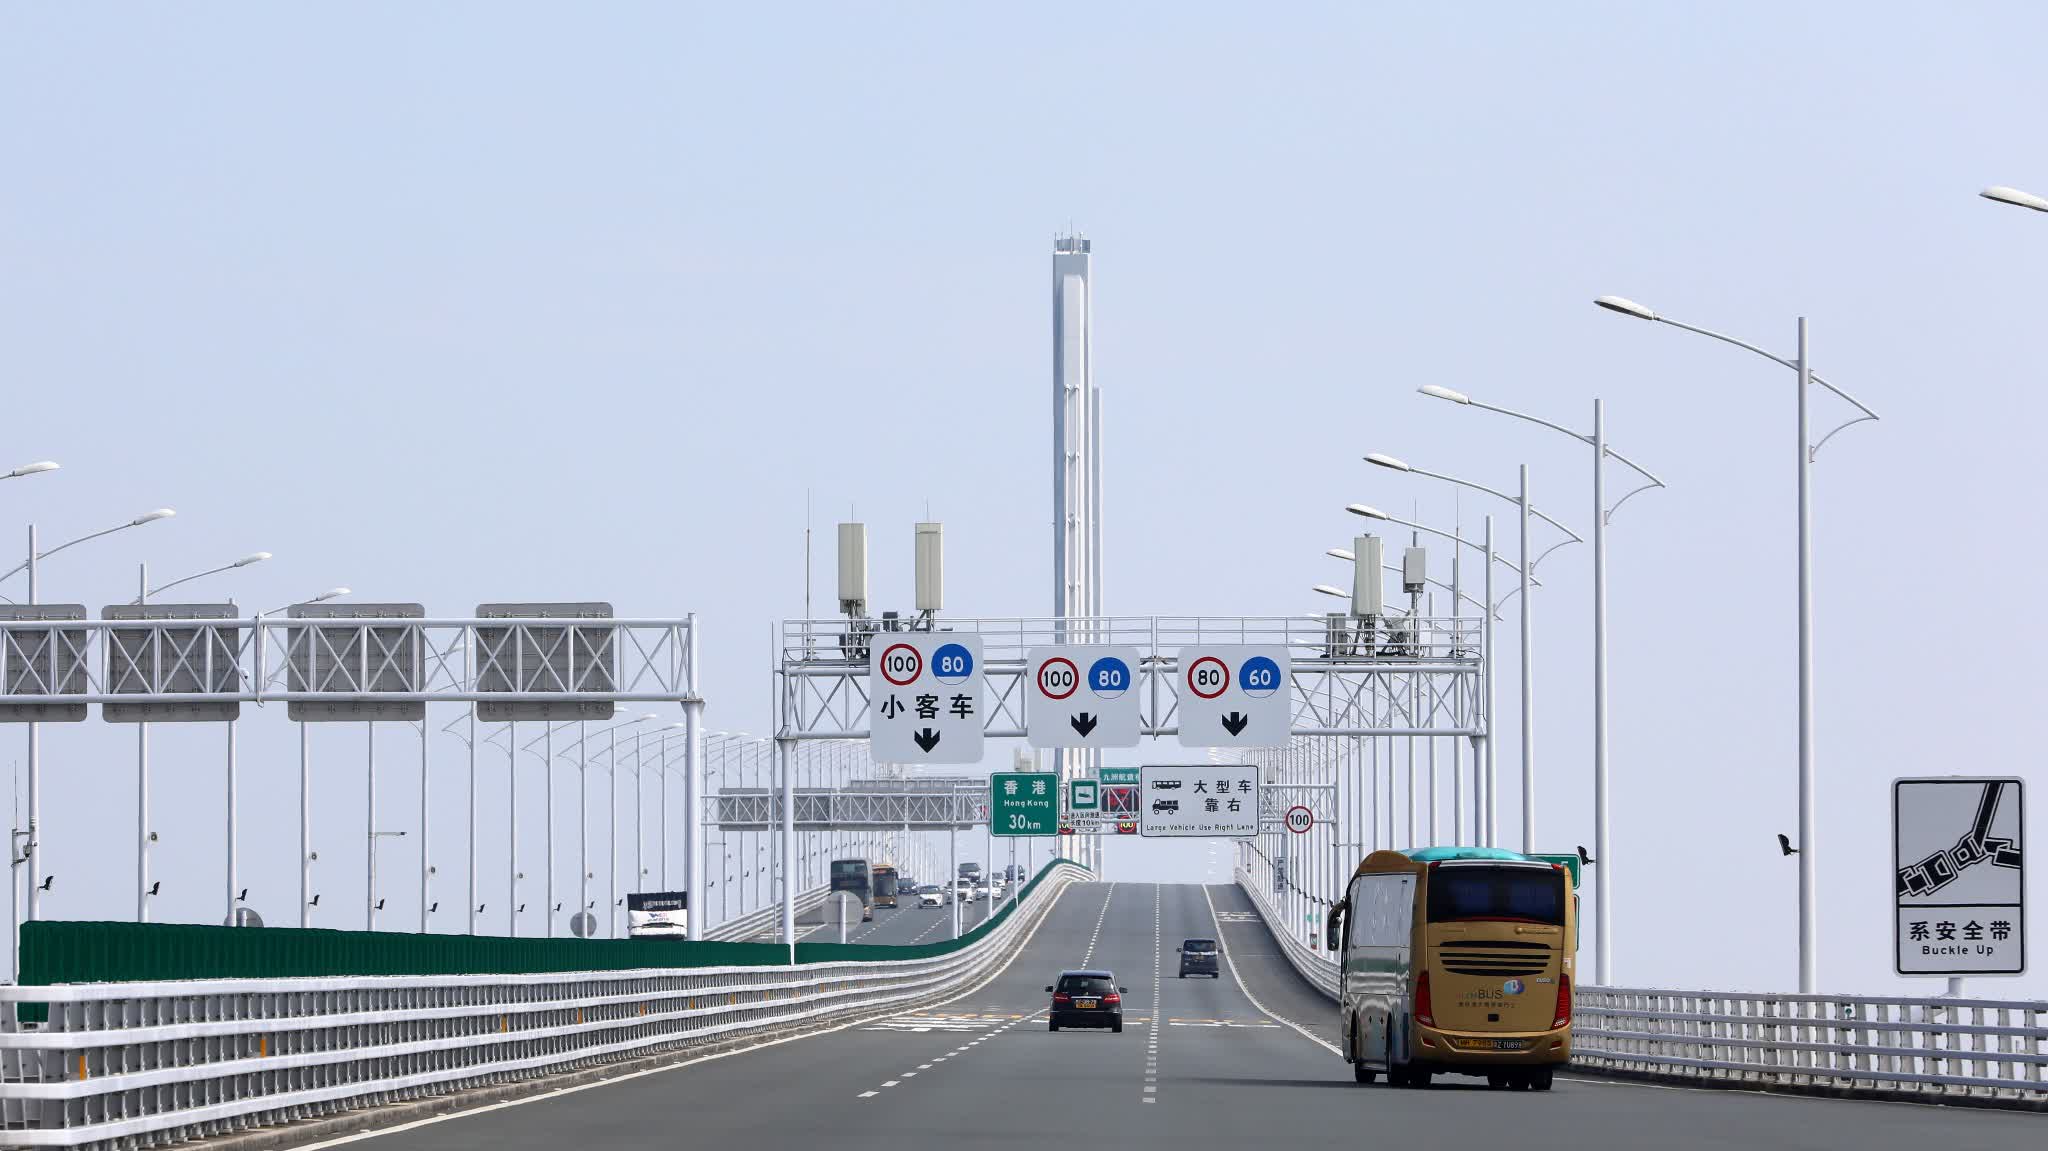 Hong Kong-Zhuhai-Macao Bridge to be partially closed from July 28